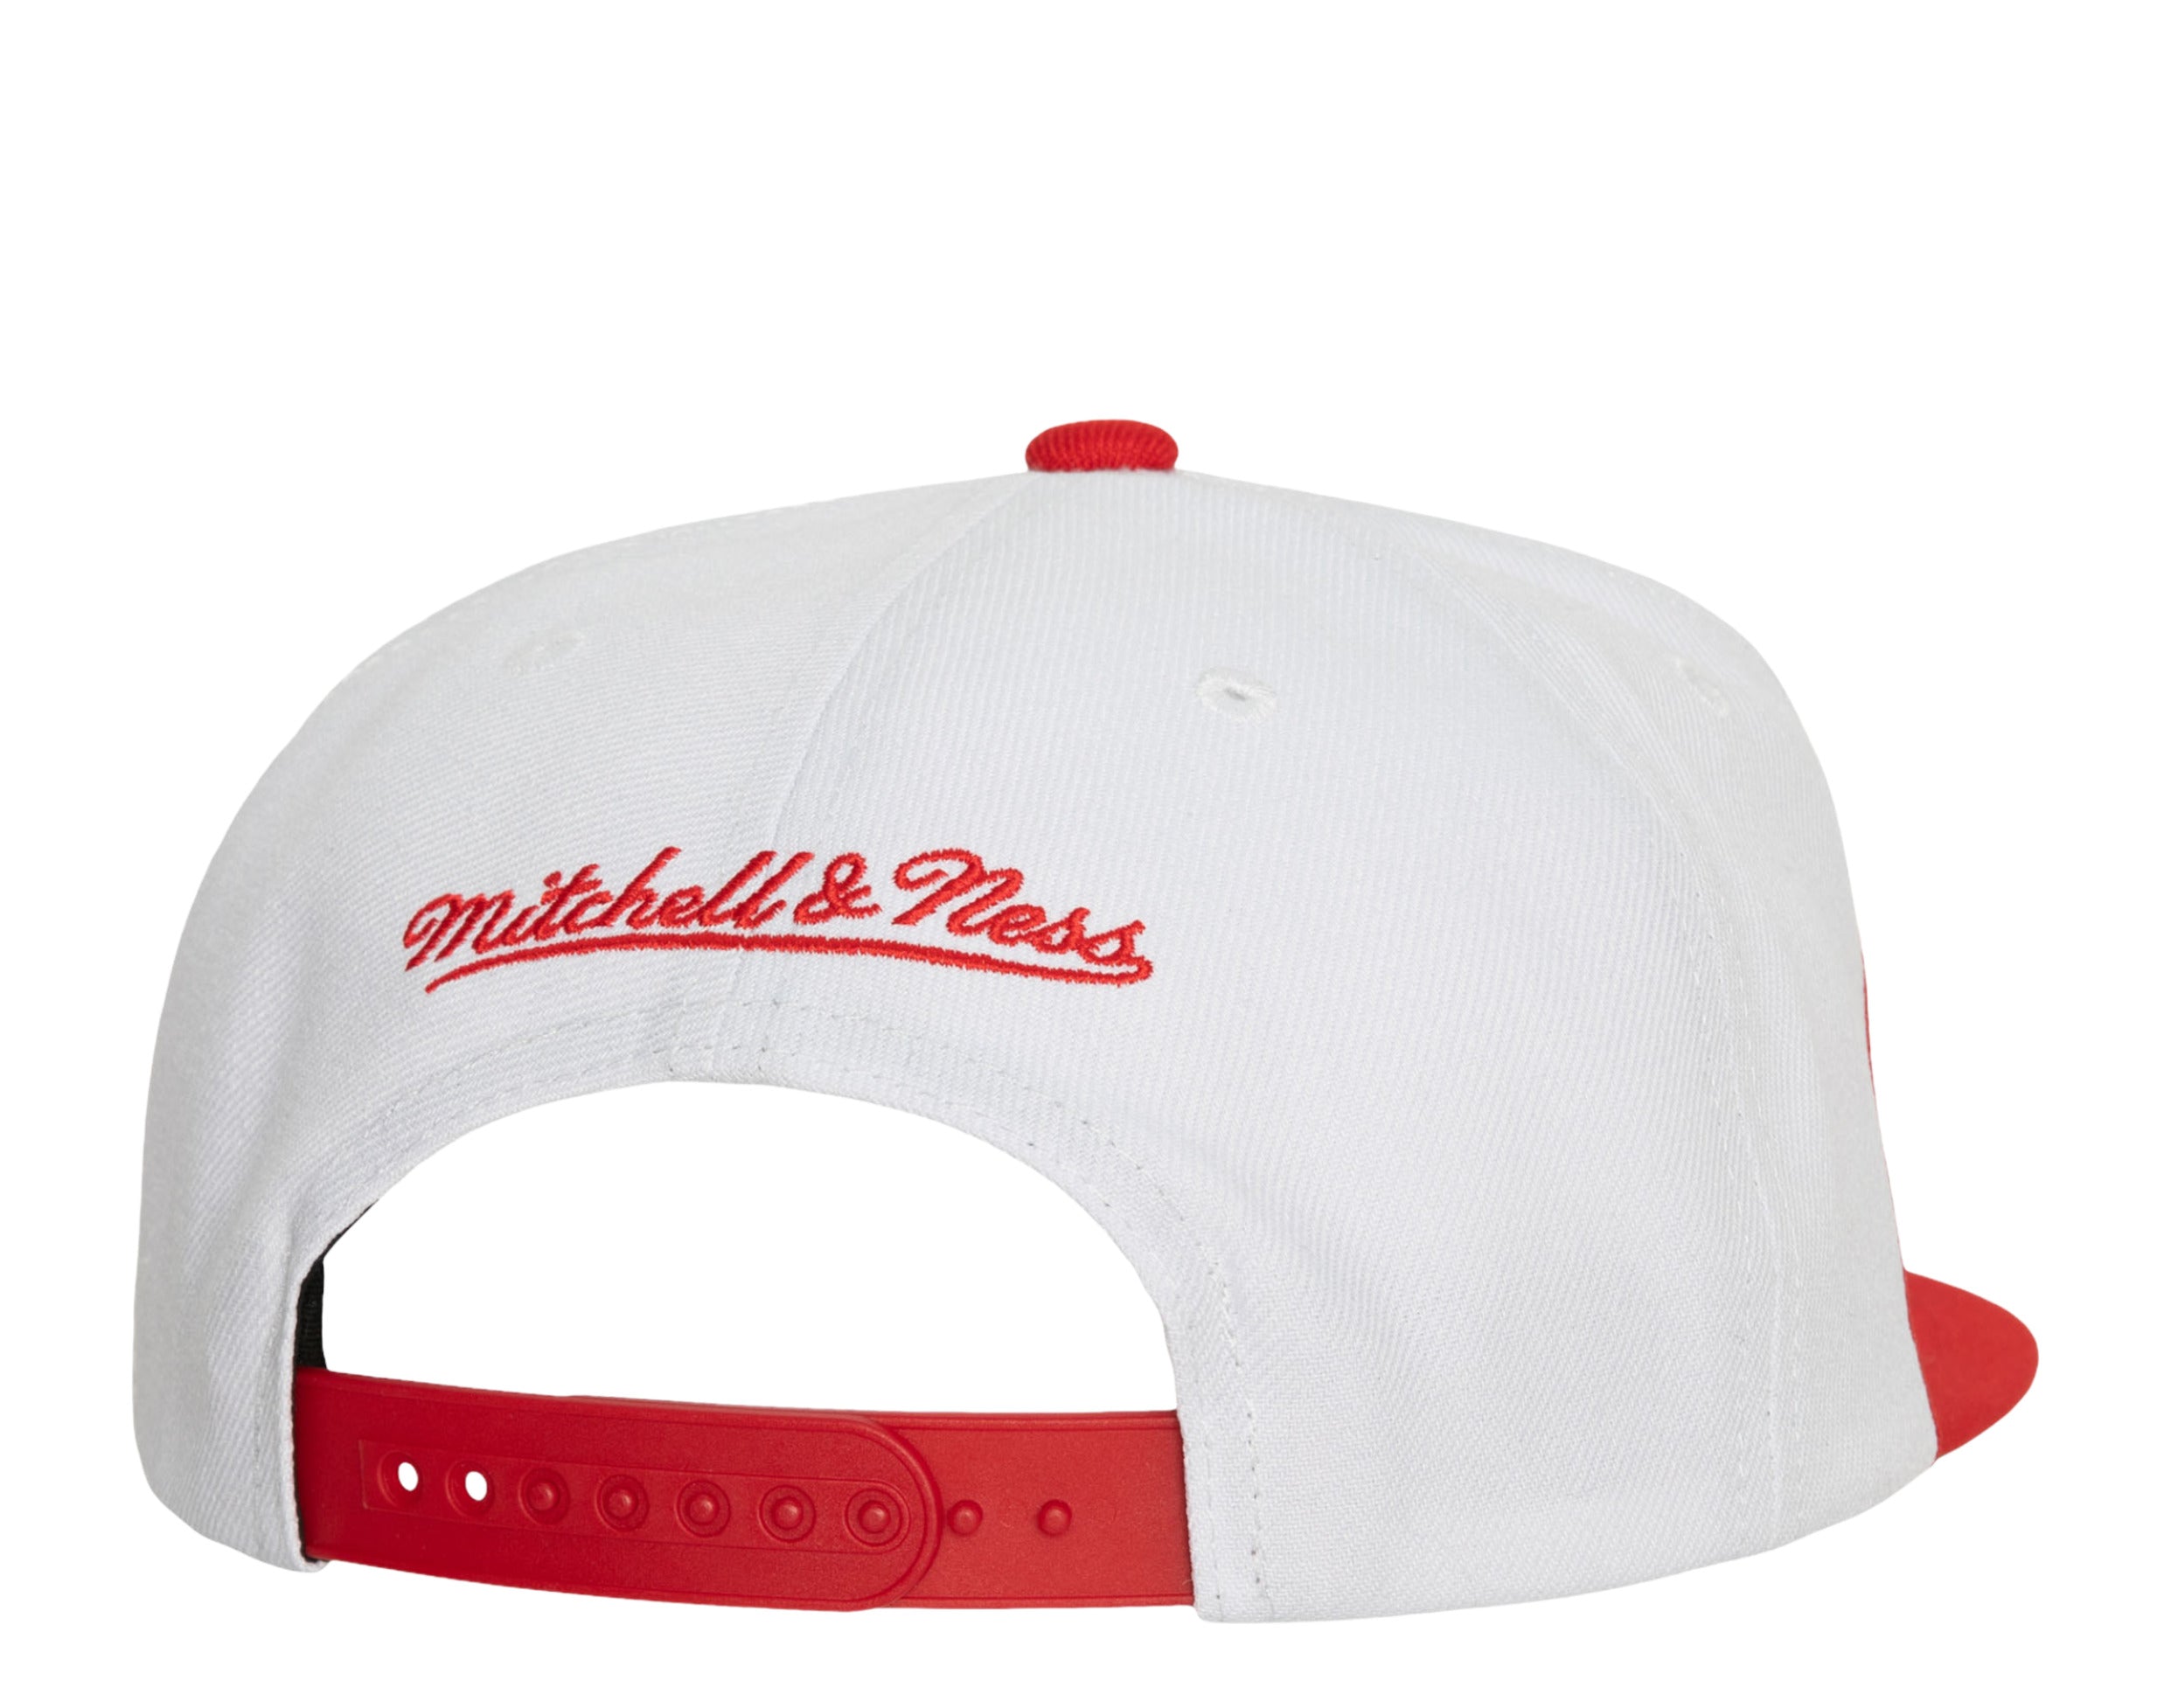 New Jersey Devils Hat Vintage - White - MSG Plus - NJ - RARE - FREE SHIP!